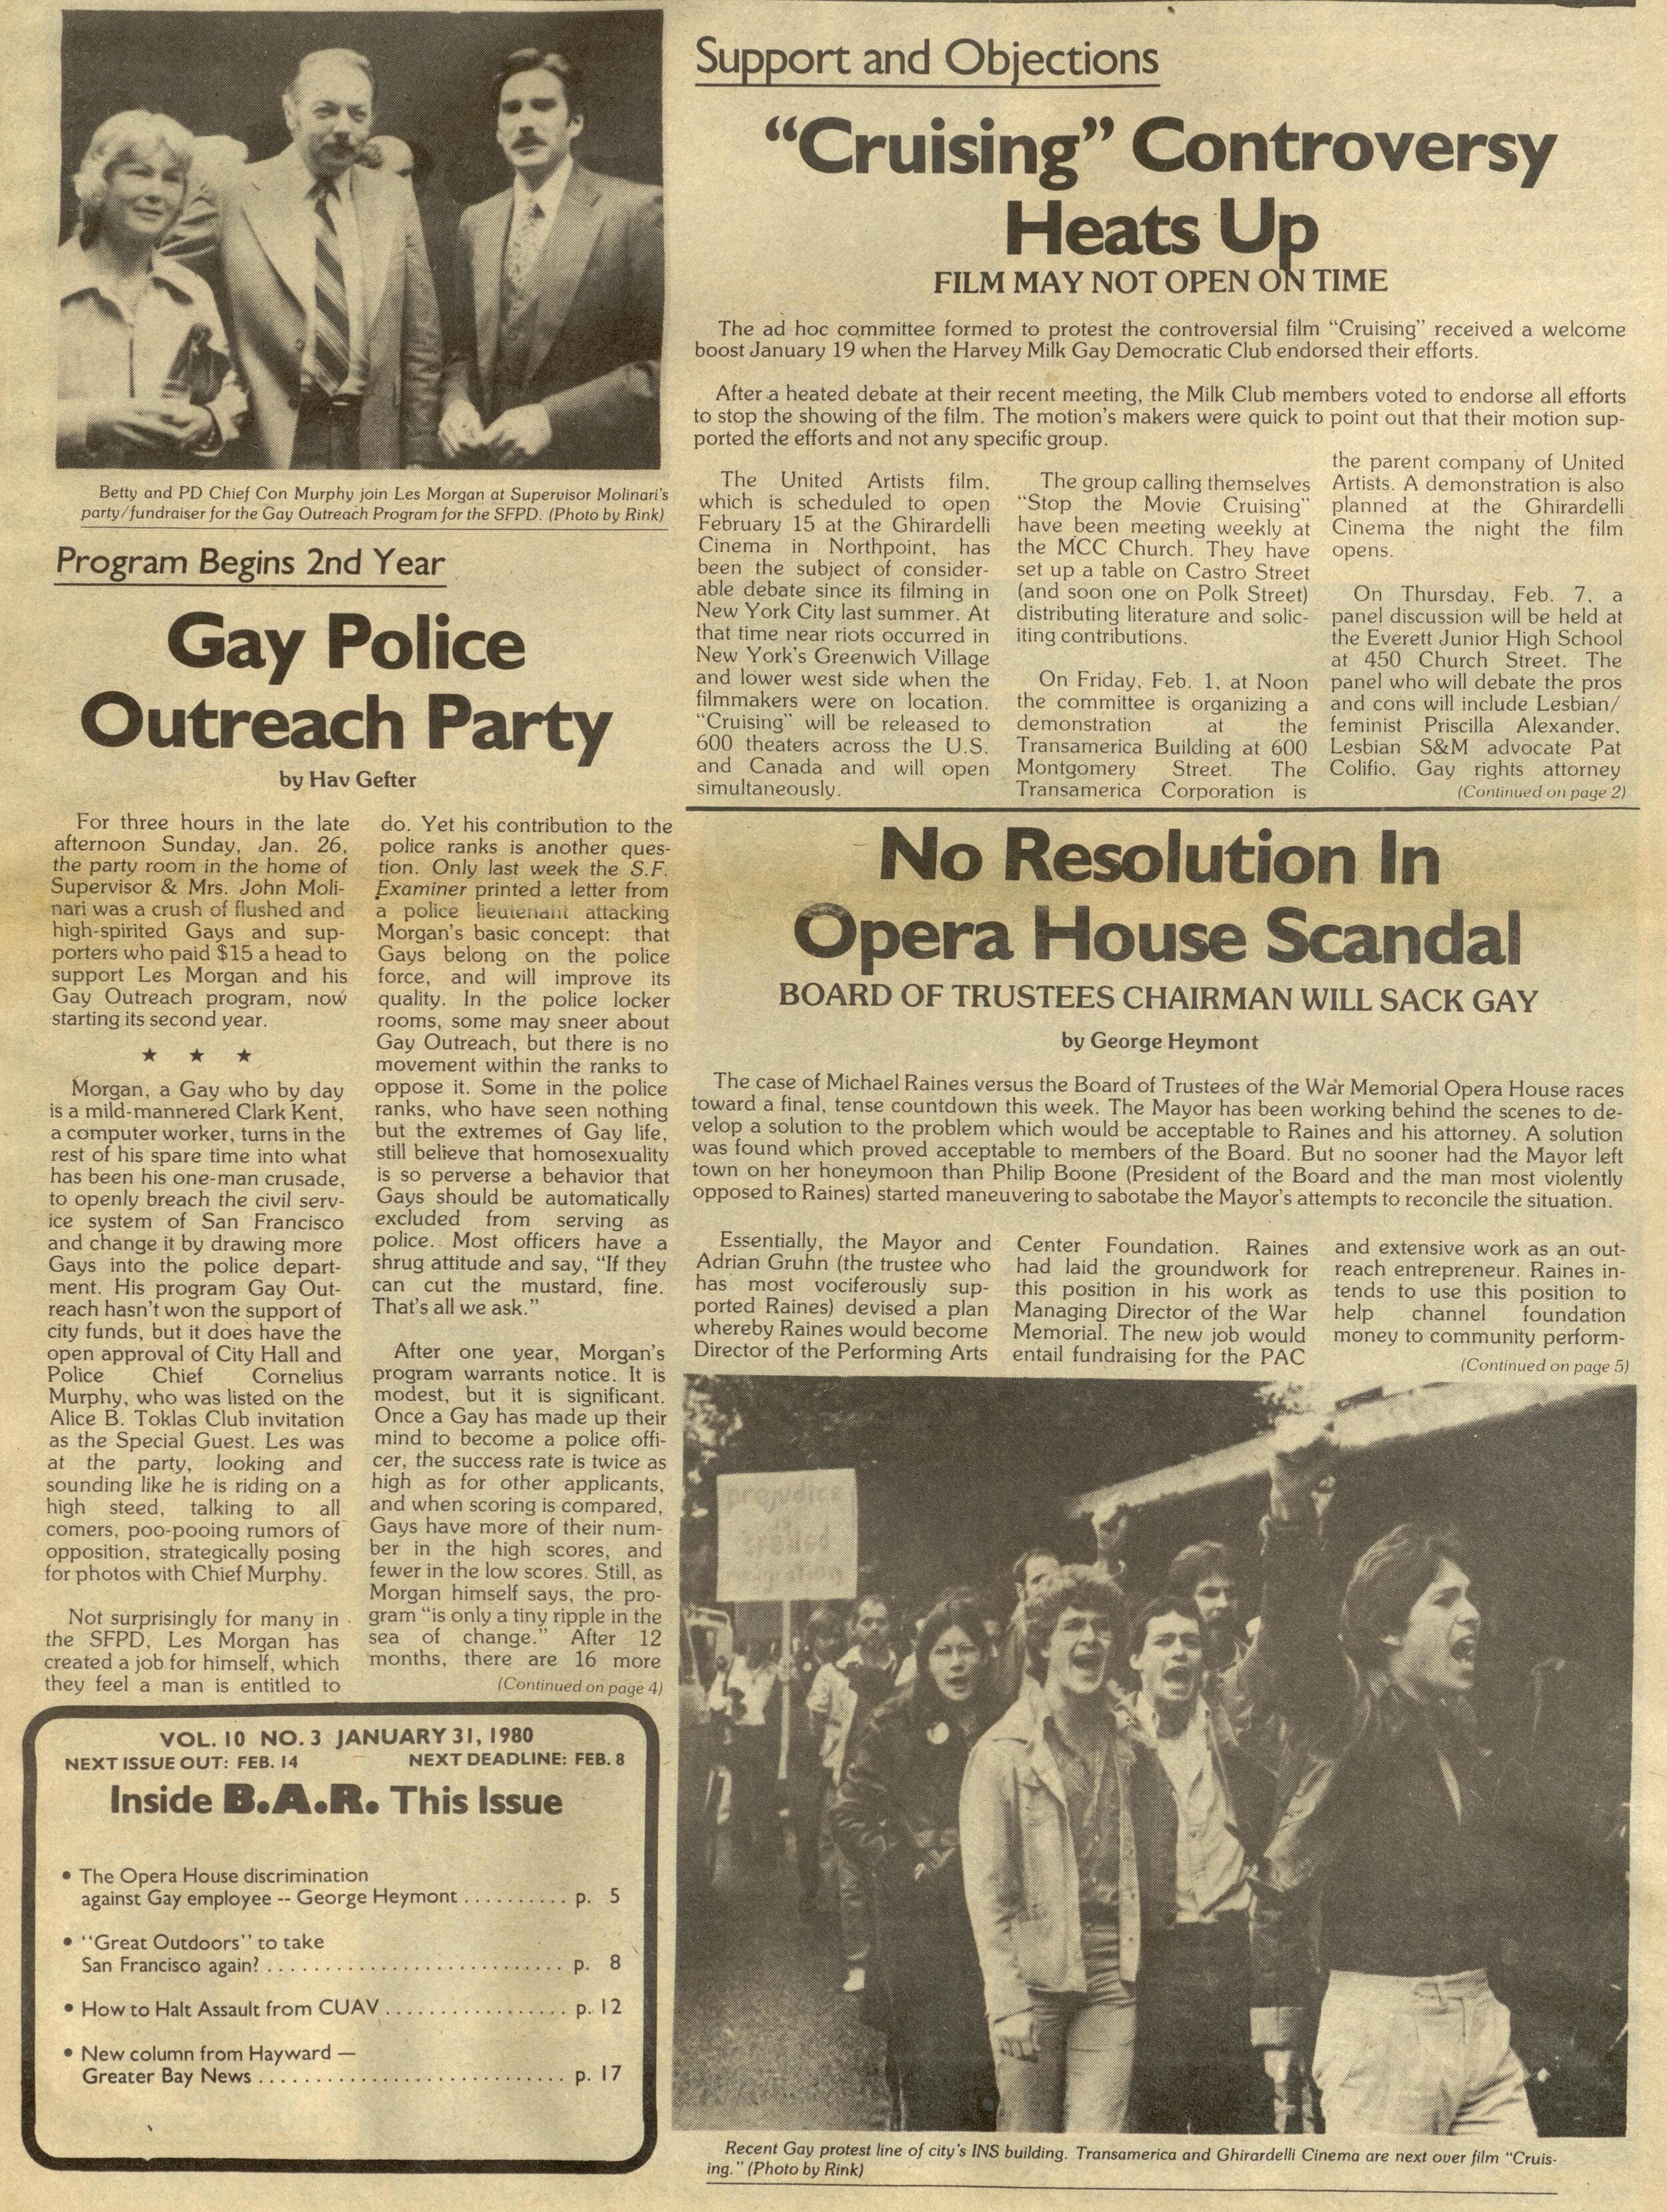  Vol. 10, No. 2, January 17, 1980.   Full Issue   &nbsp;  